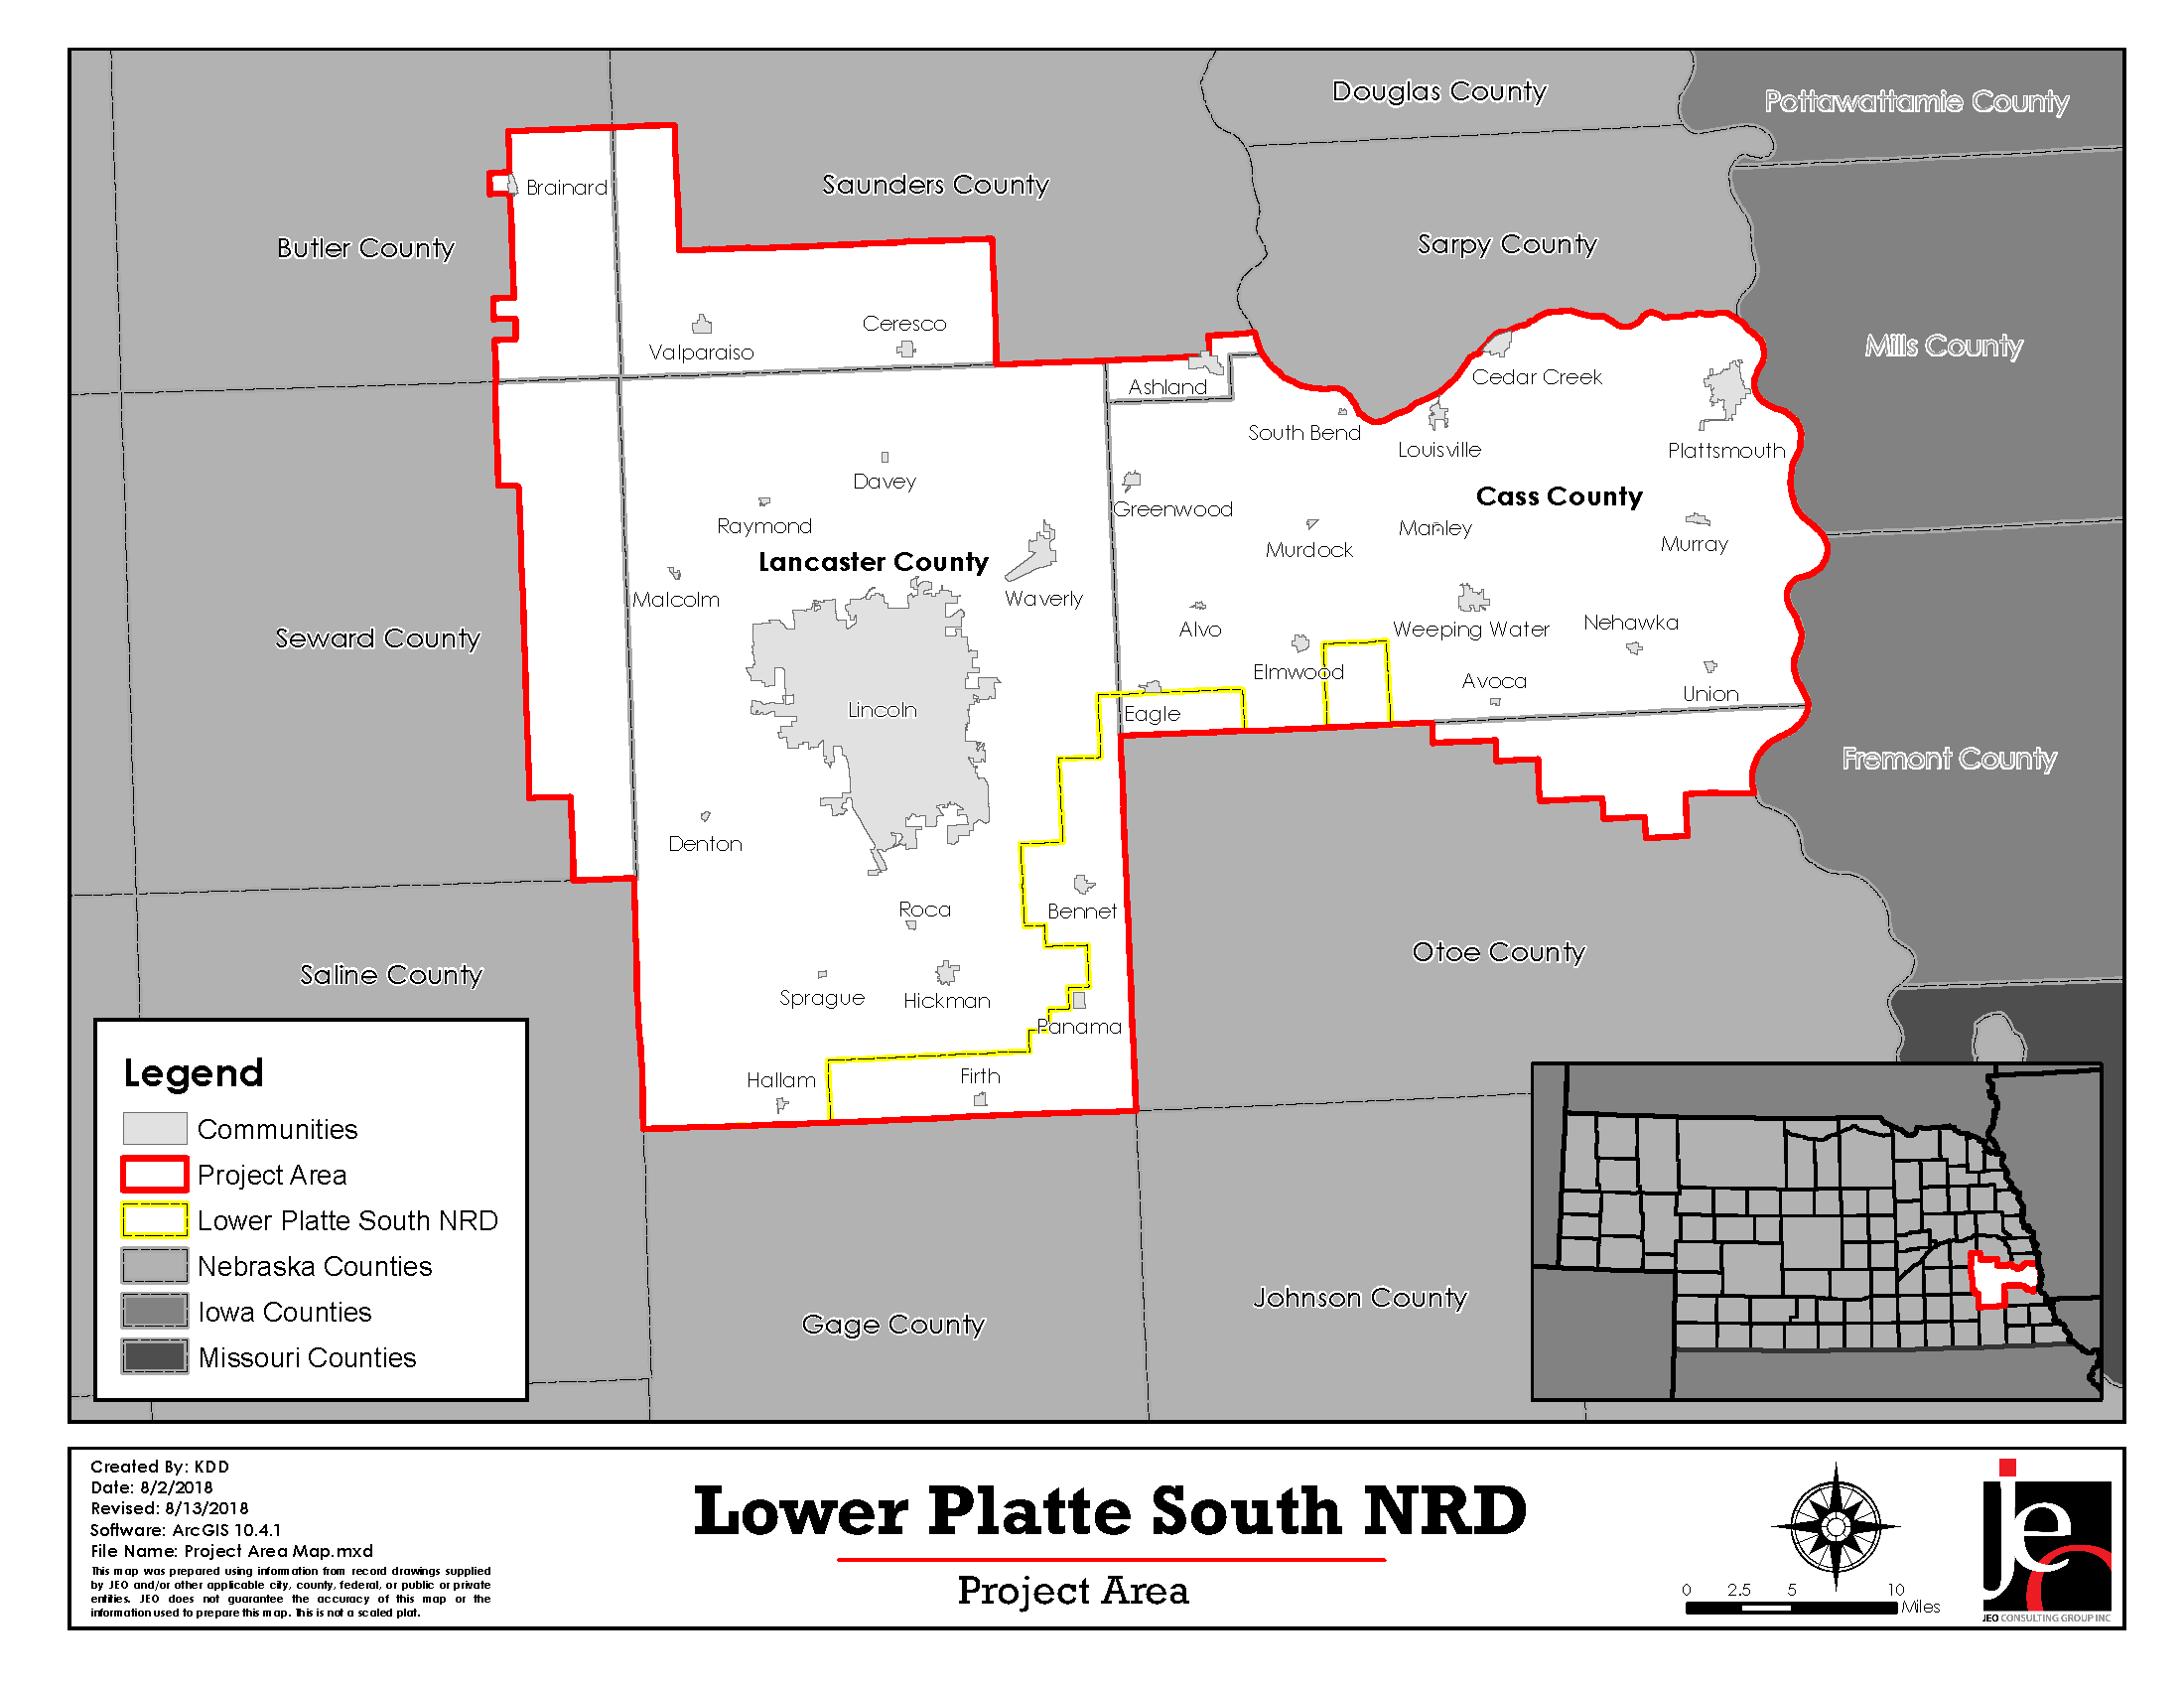 Lower Platte South NRD Planning Area